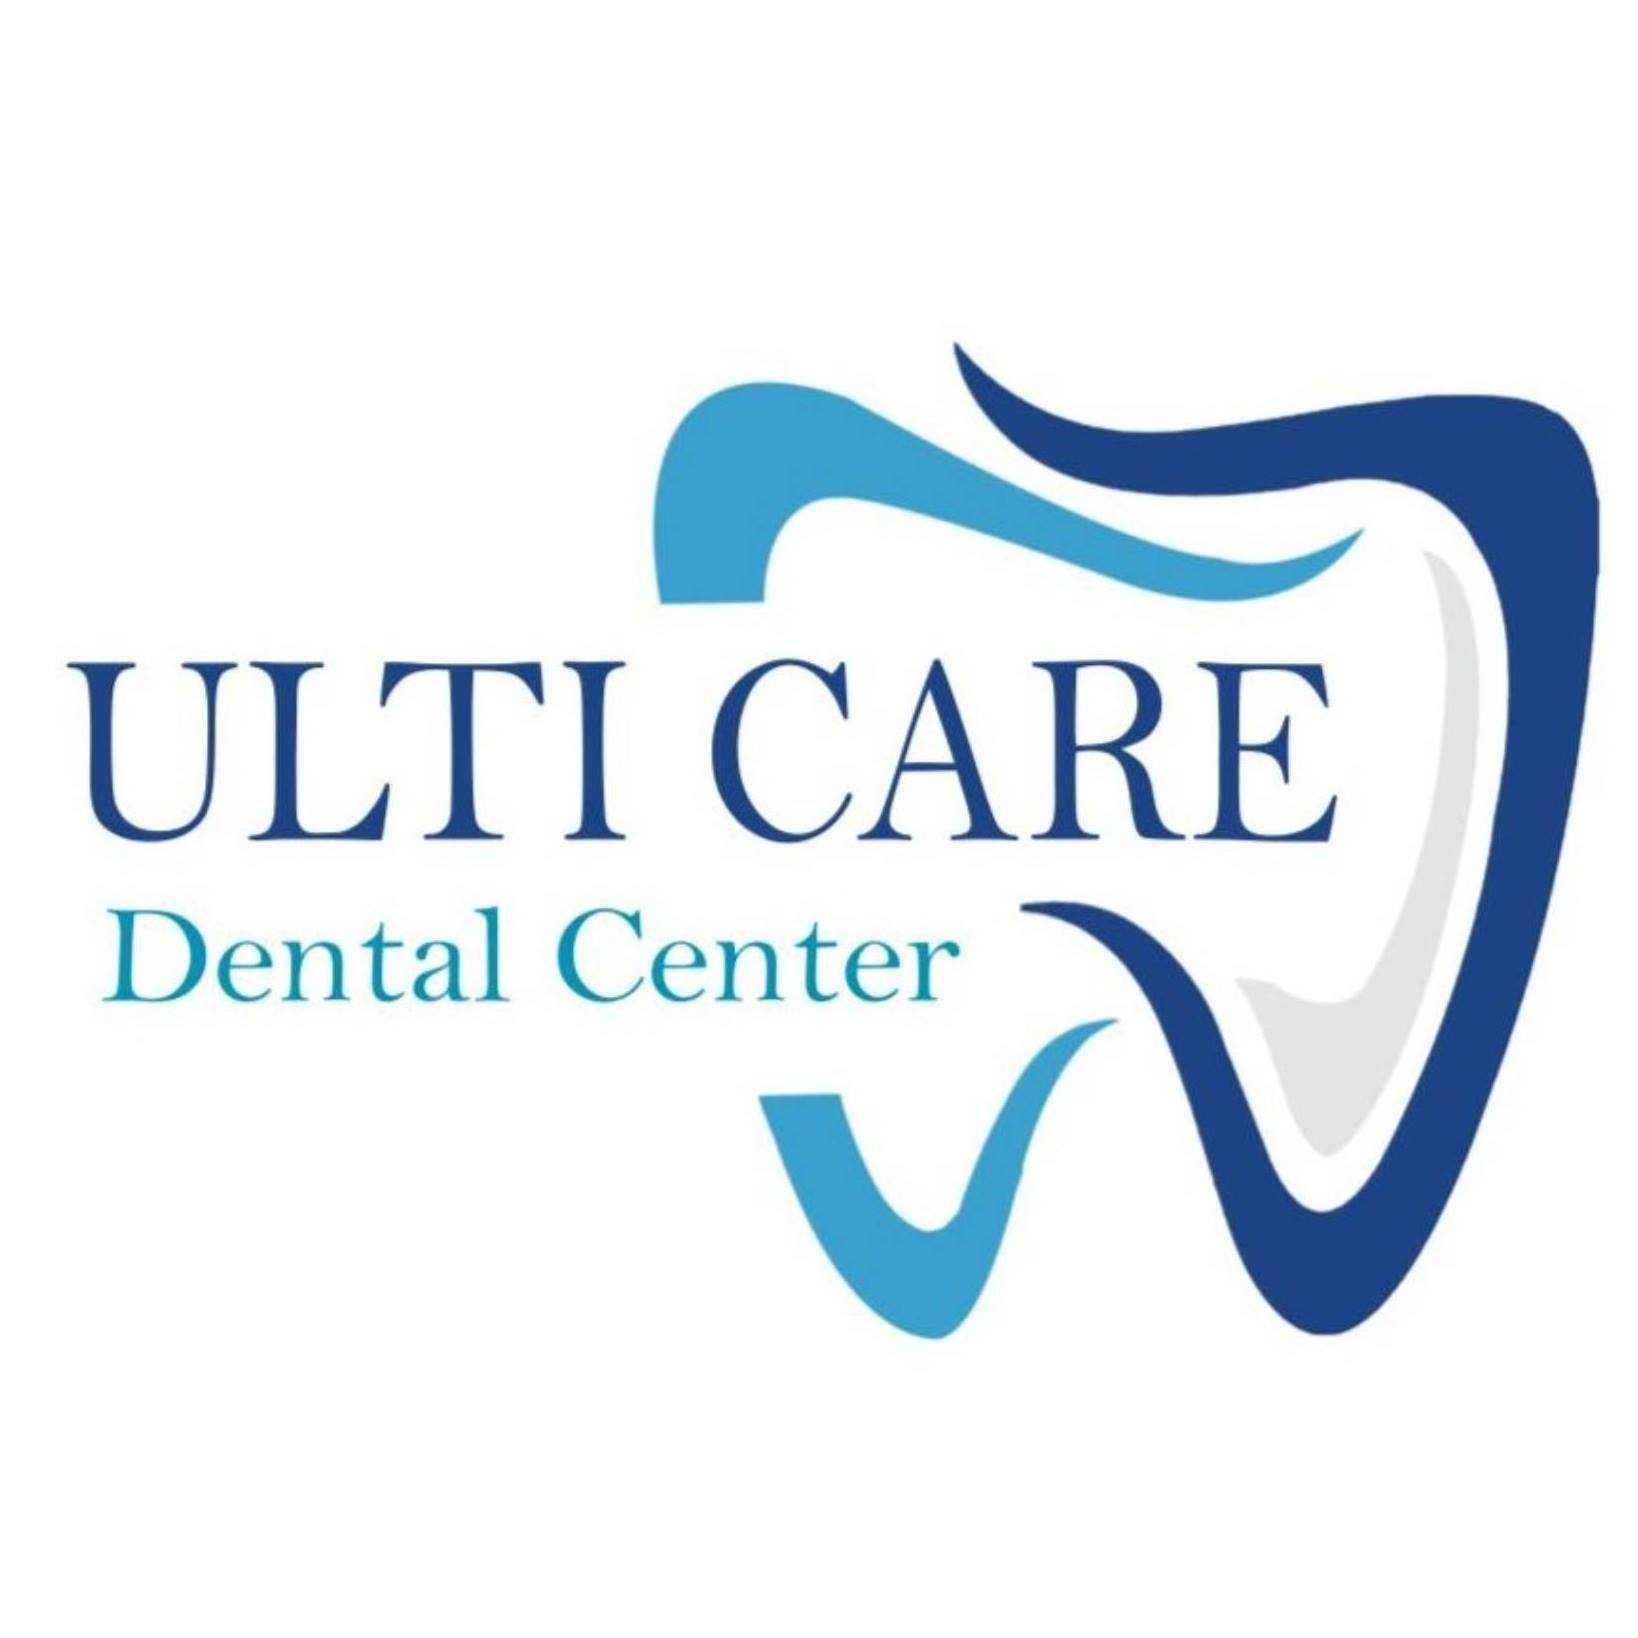 UltiCare dental center